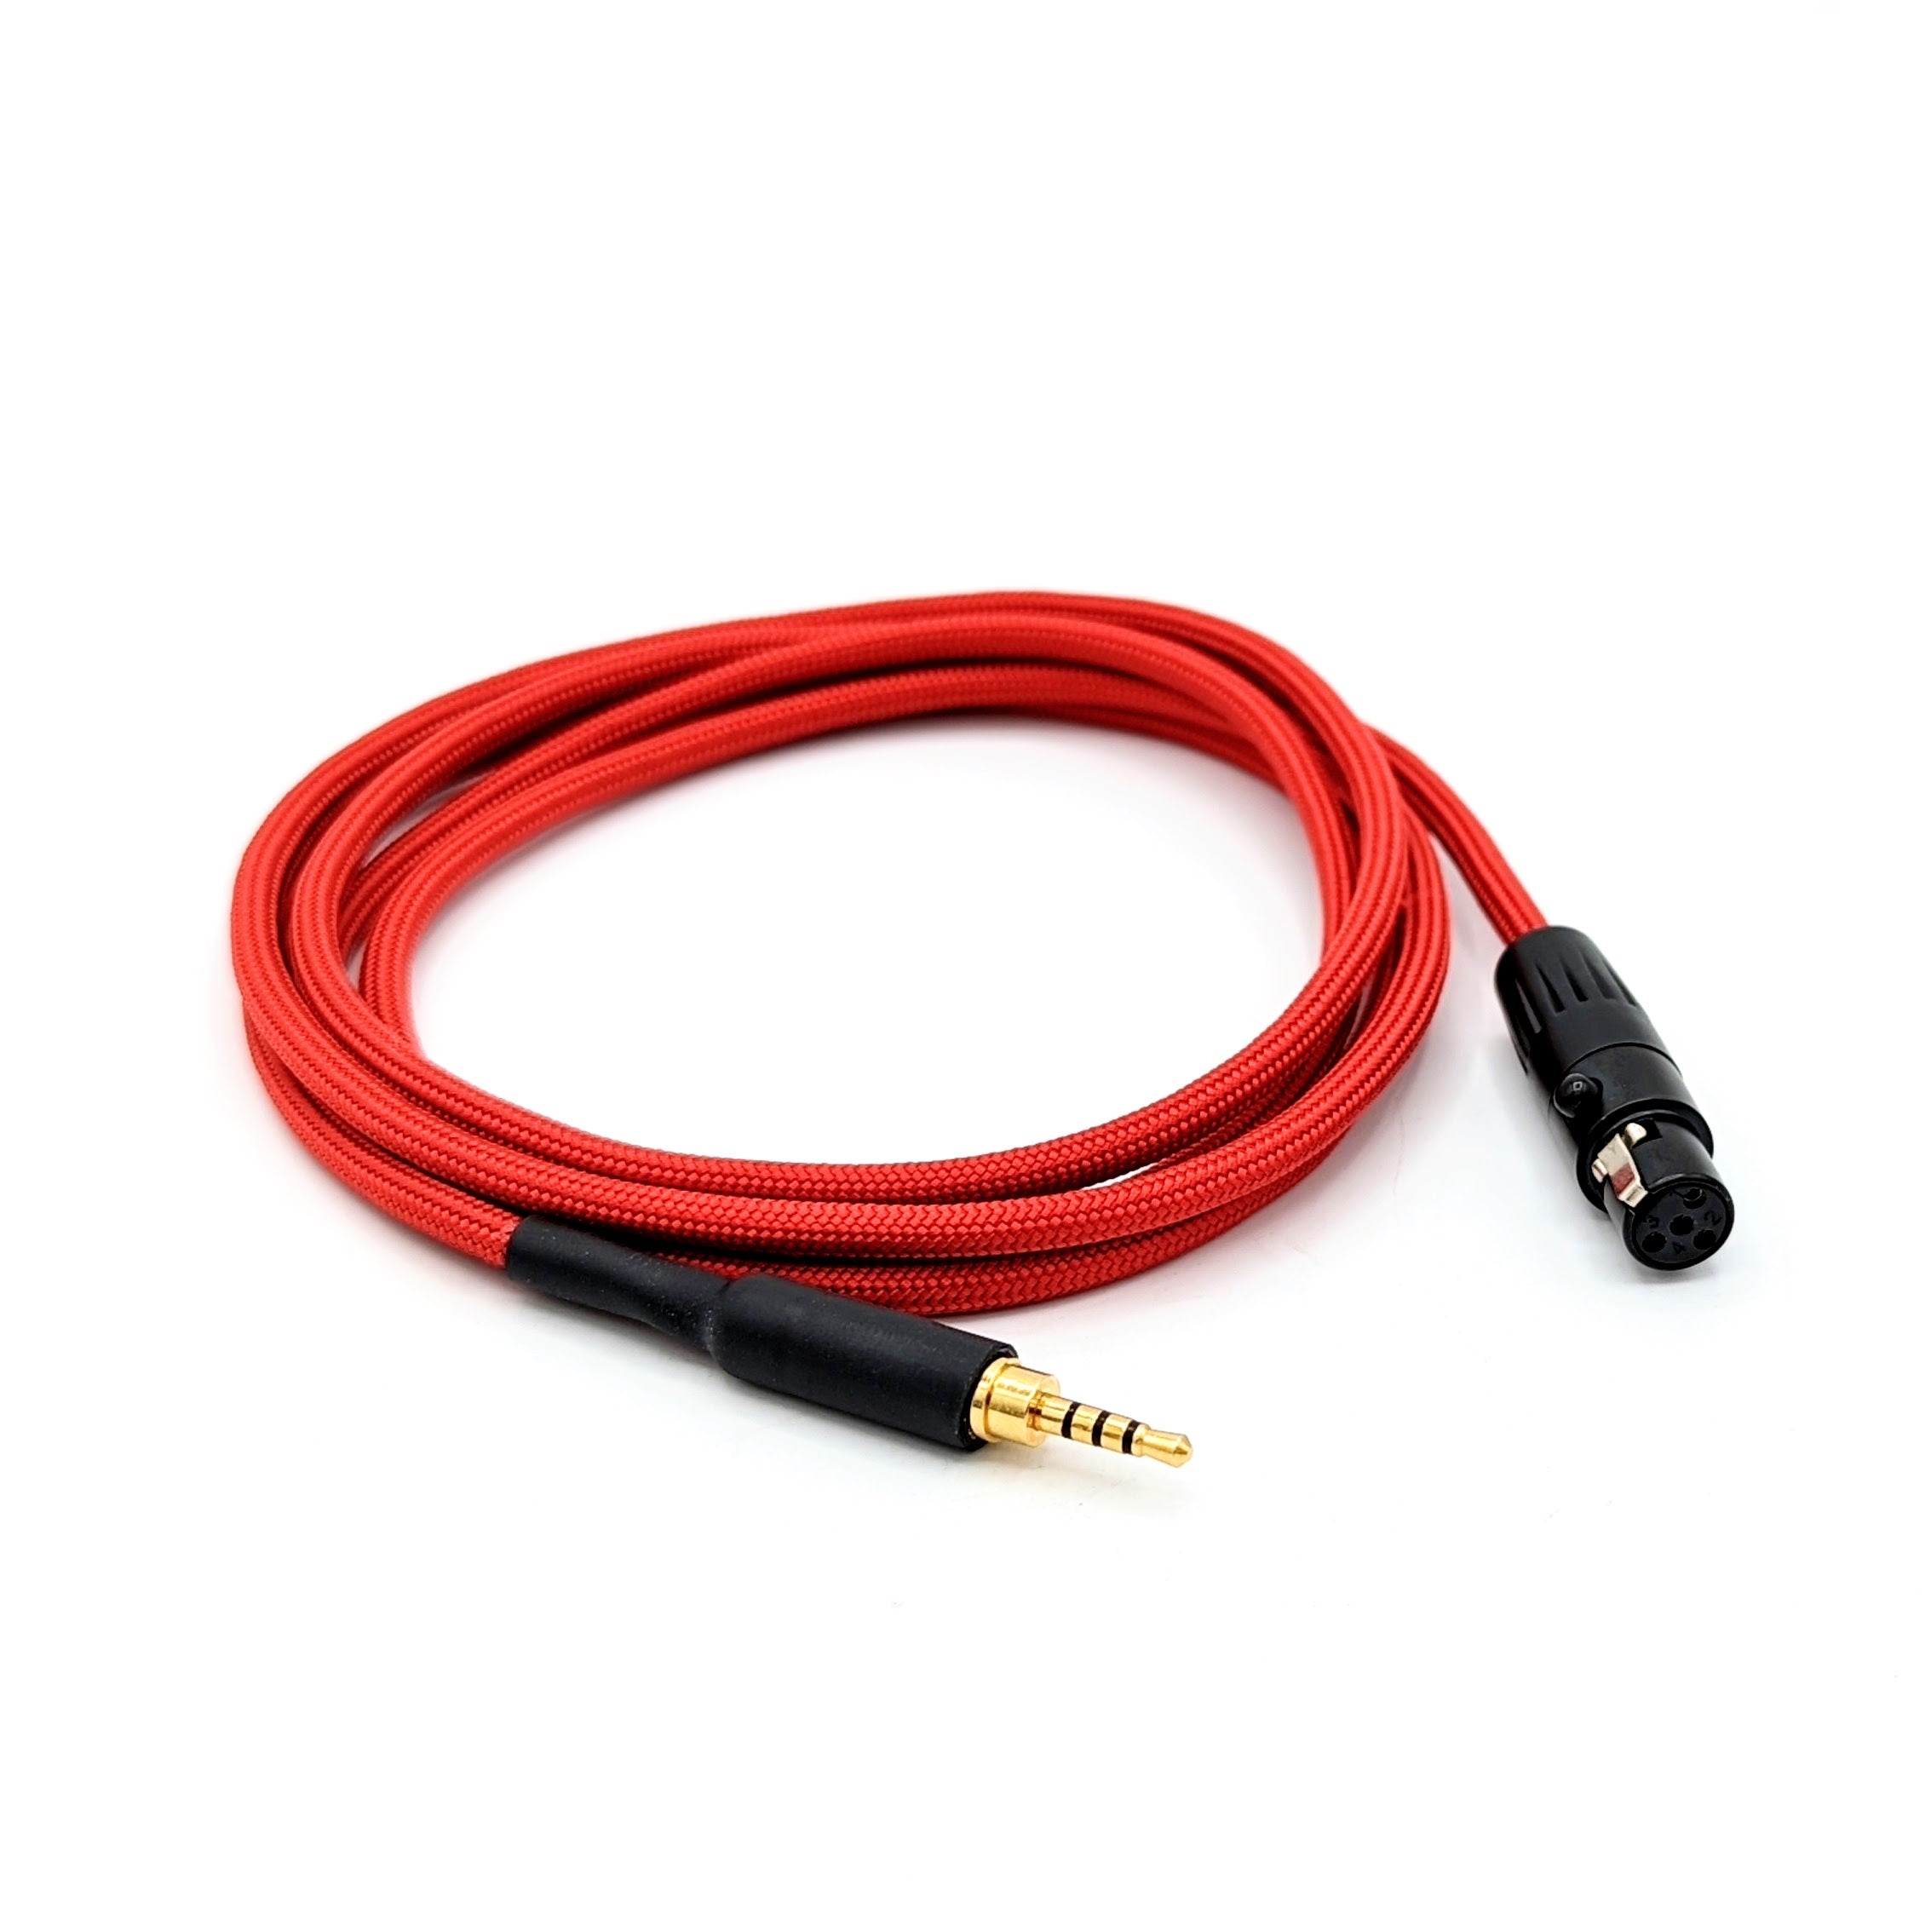 HC-KPH balanced headphone cable for Koss KPH40 headphones